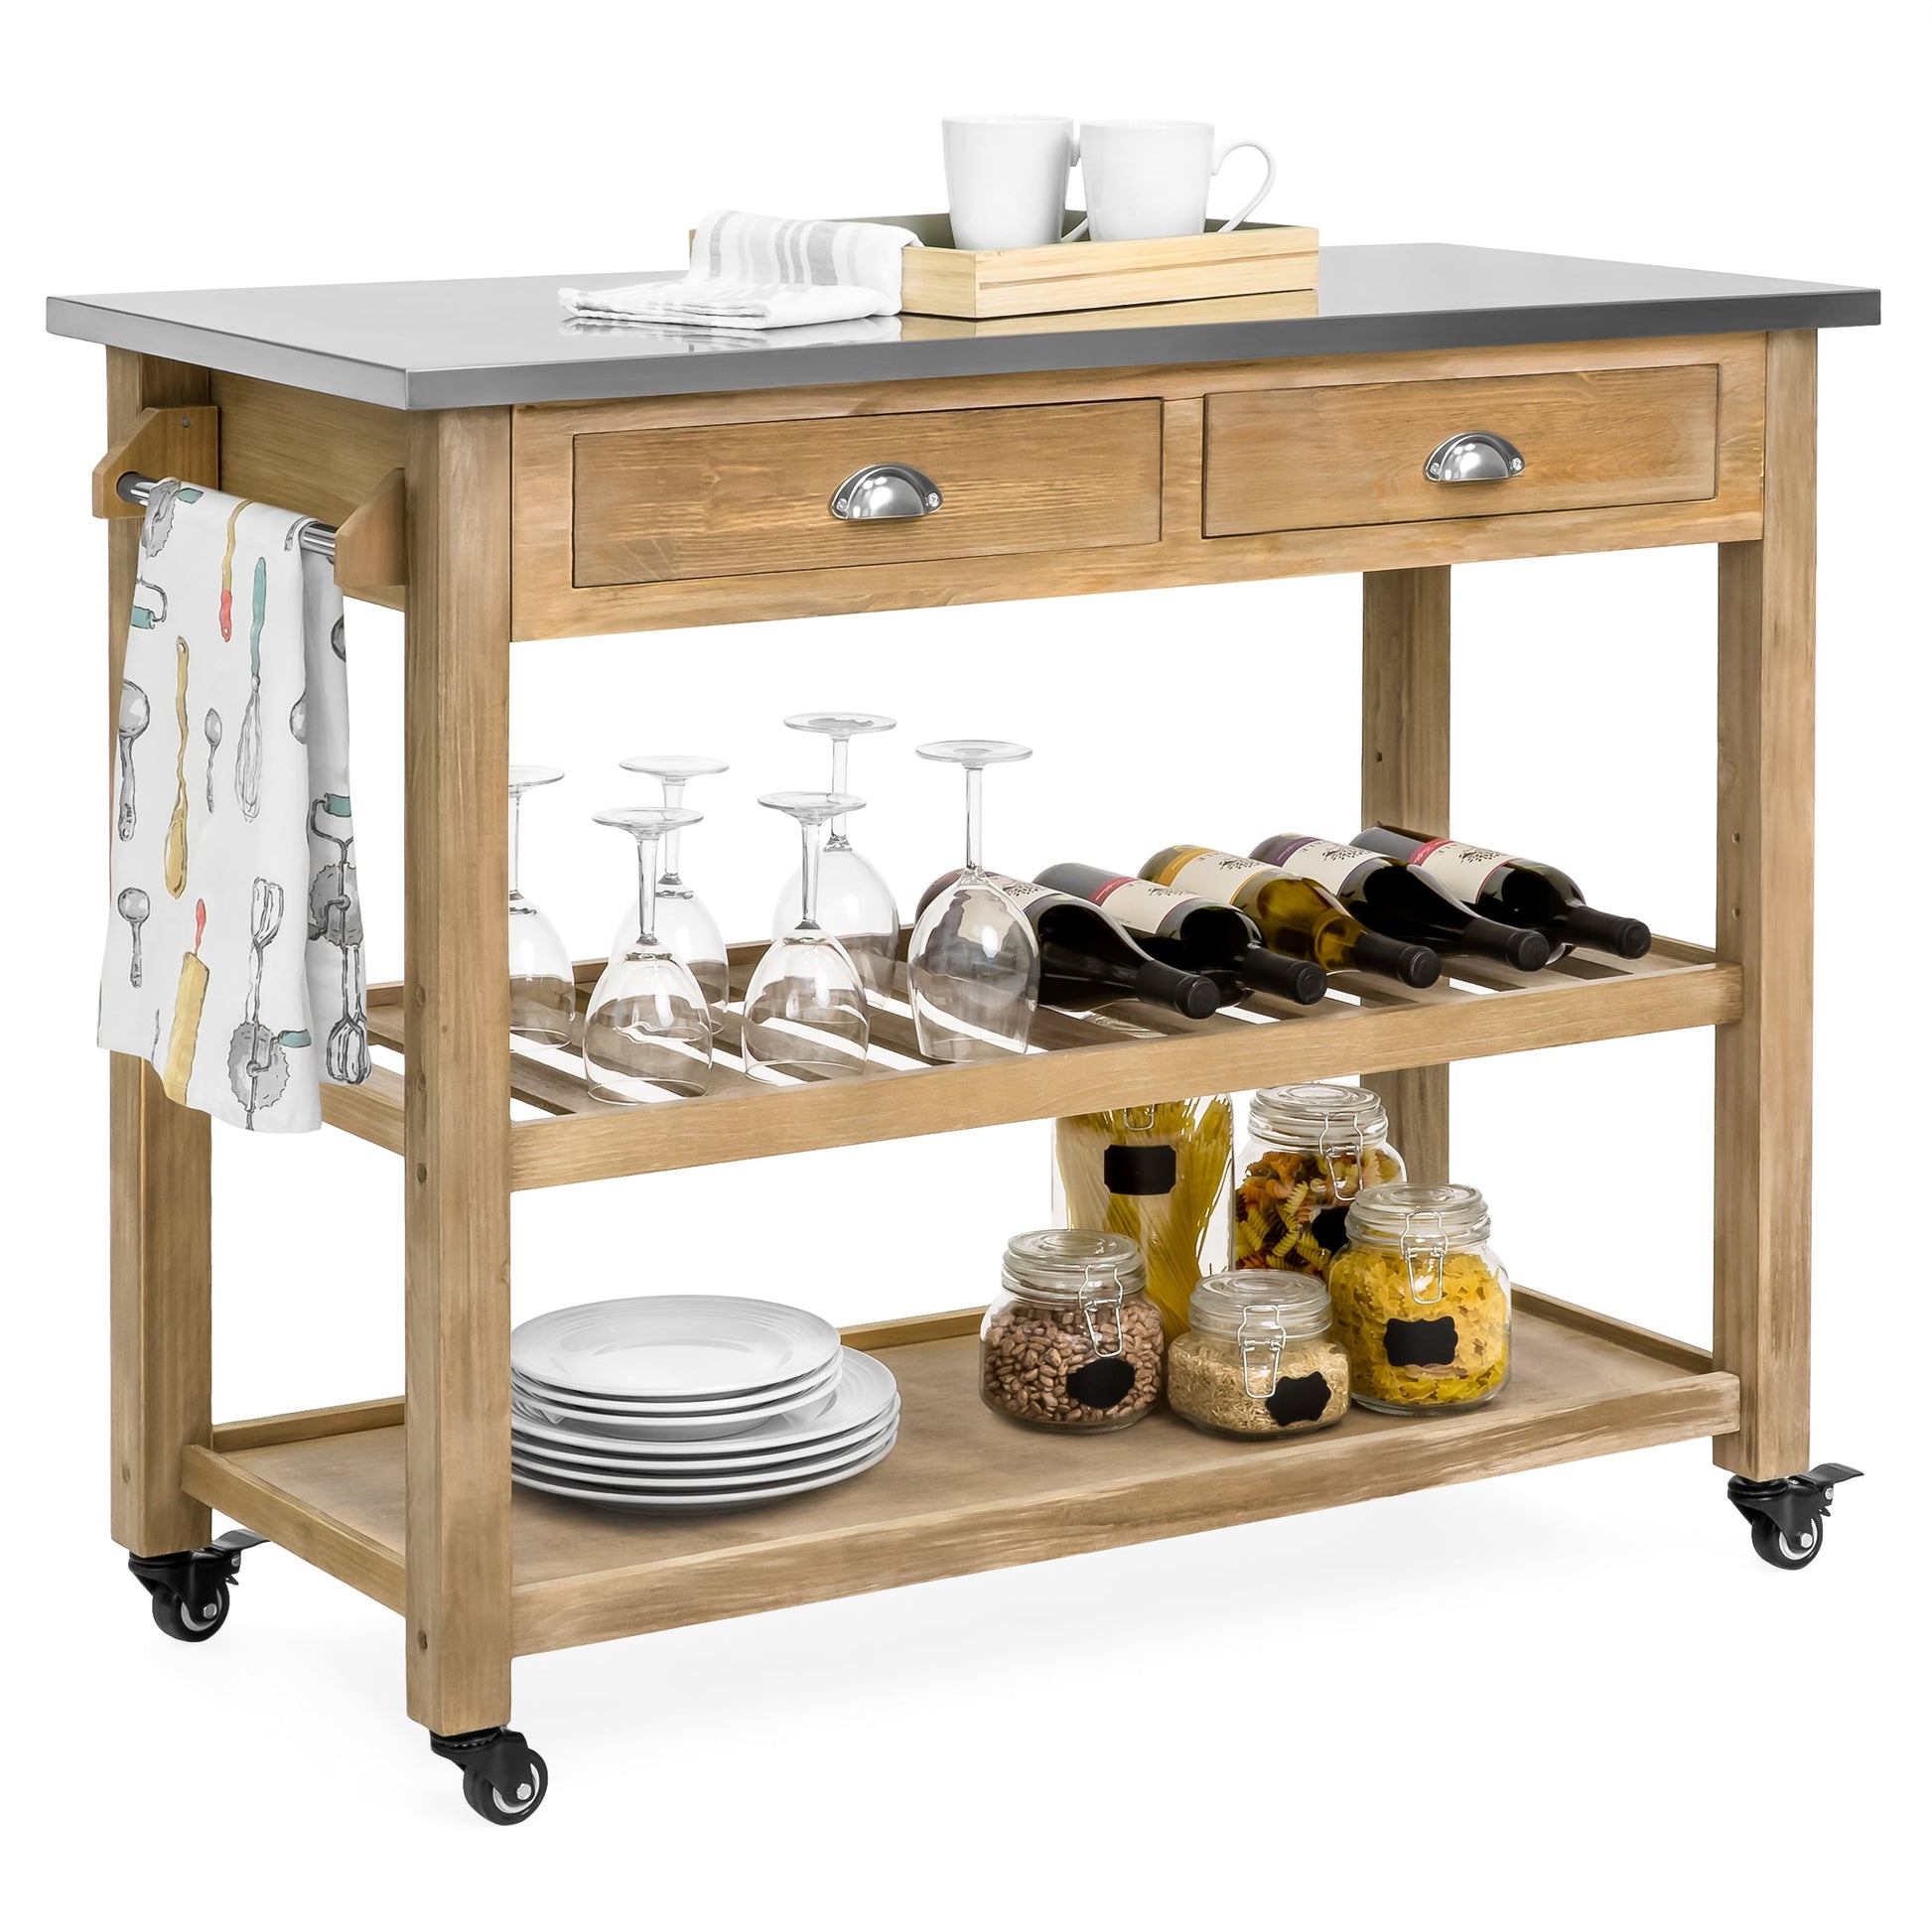 Kitchen Island Storage & Bar Cart w/ Stainless Steel Top - Rustic Wood